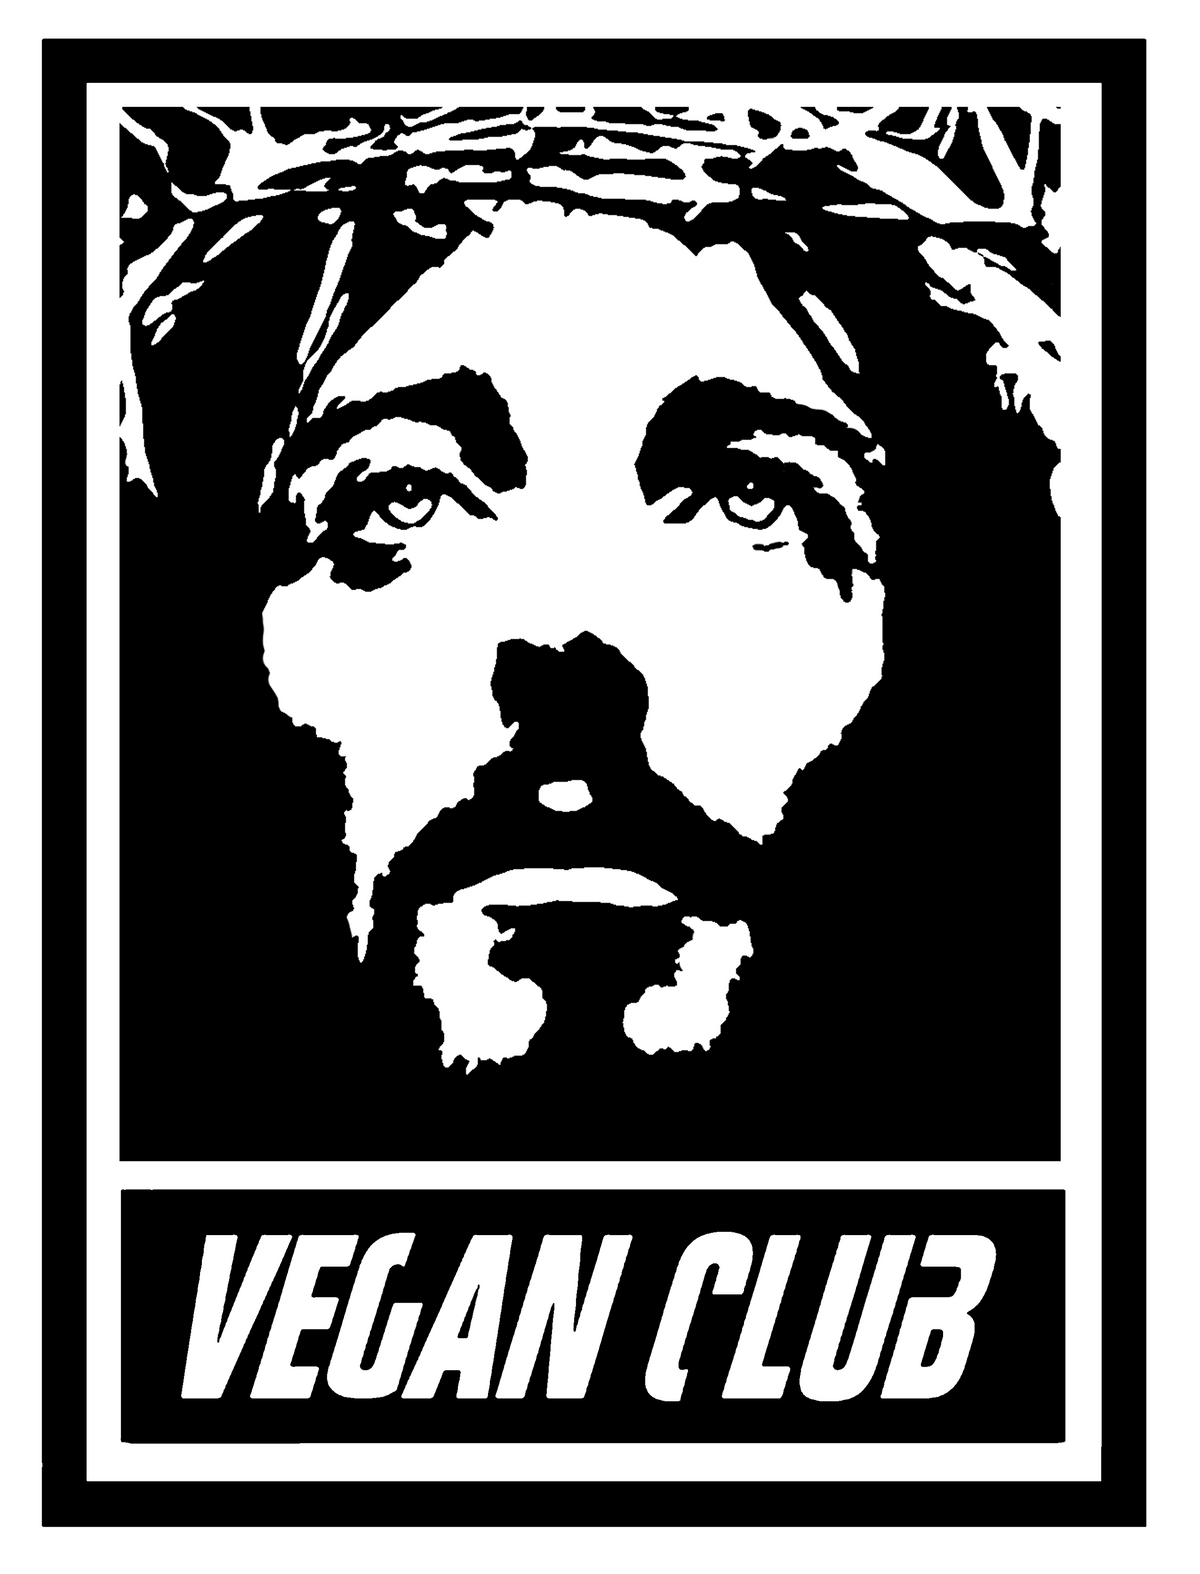 AUCTION - NewsPrint Poster Vegan Club featuring Jesus & Christspiracy